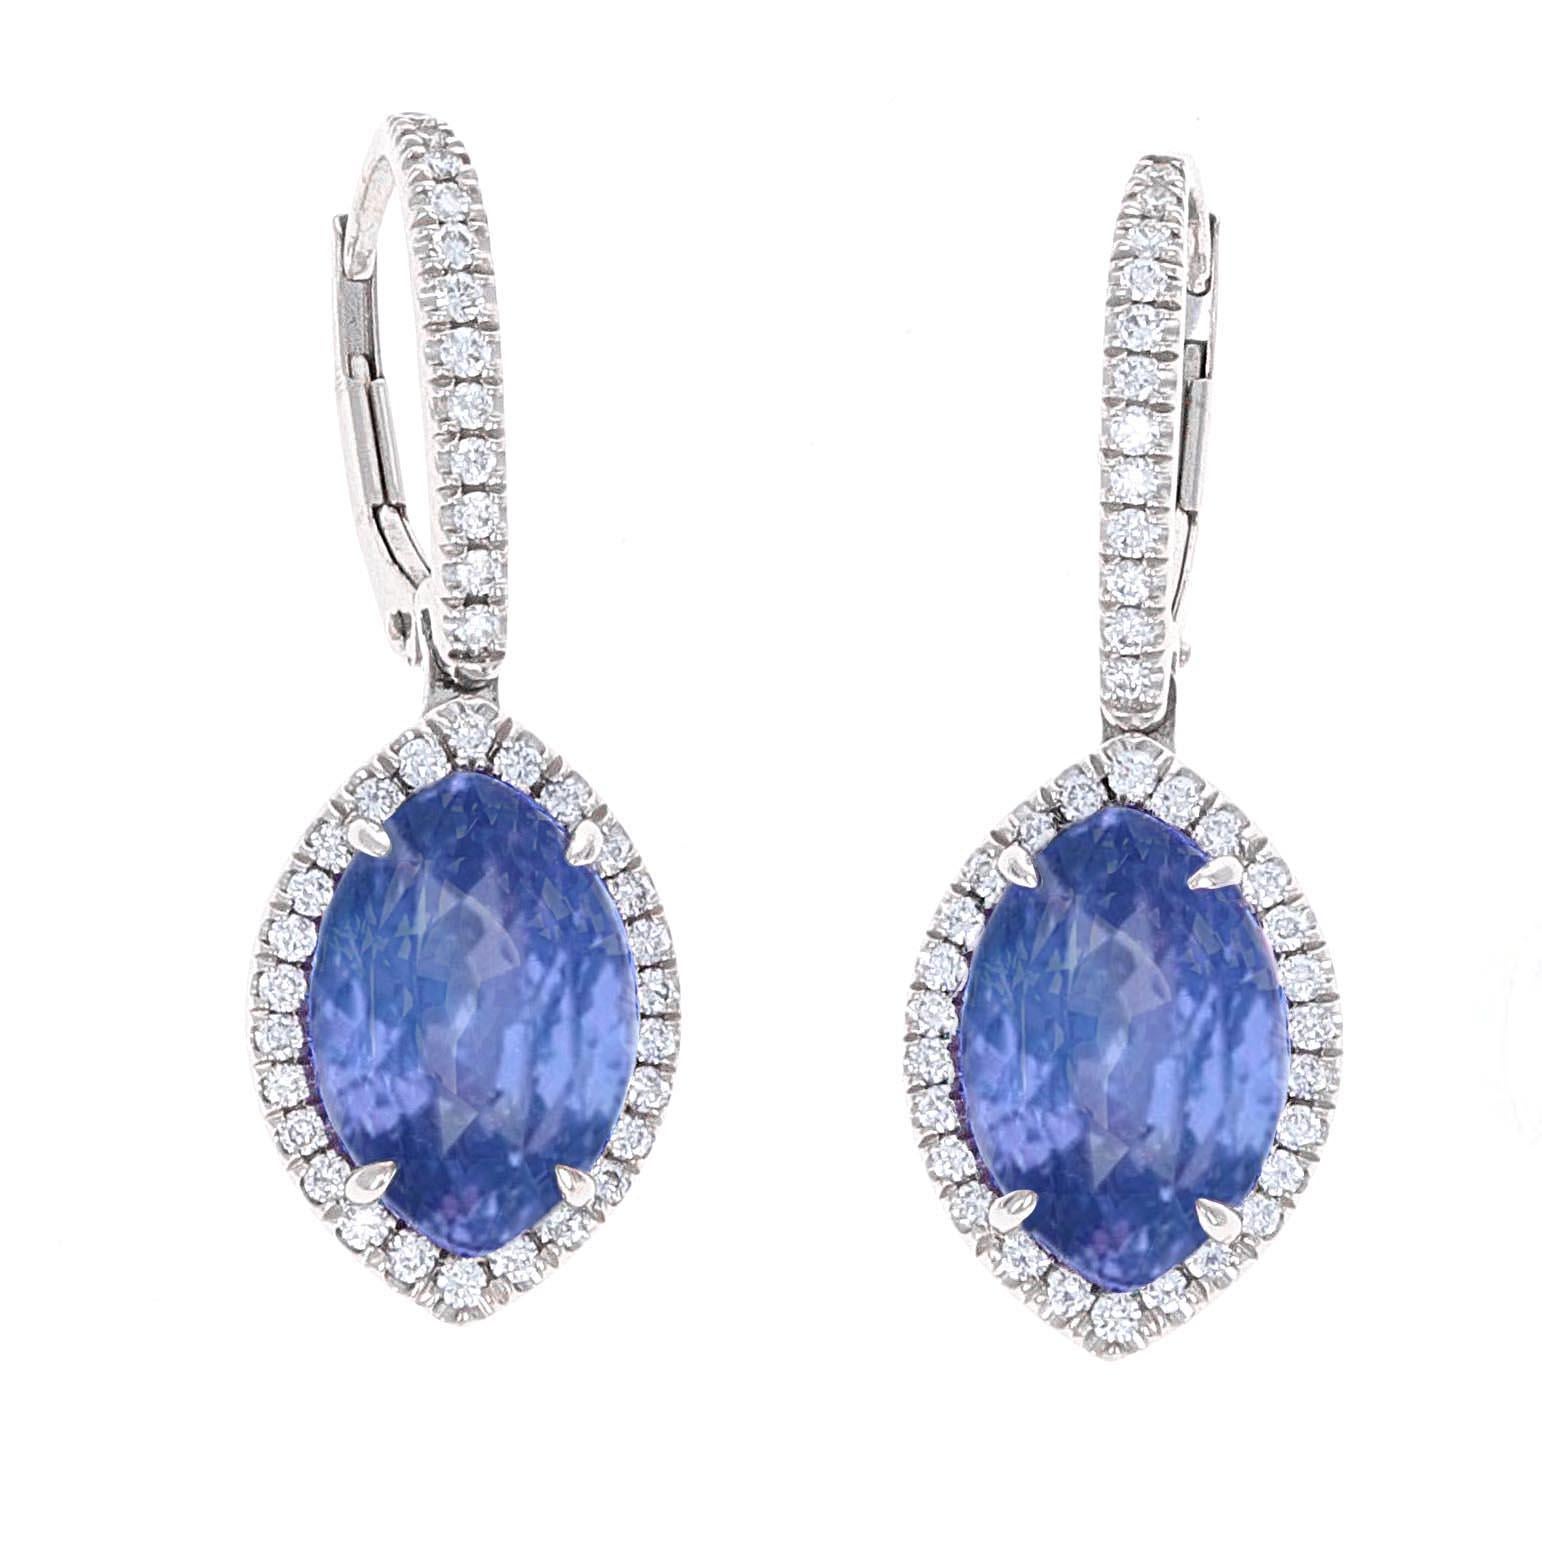 Contemporary GIA Certified, 9.96 Carat No Heat Color-Change Sapphire Drop Earrings